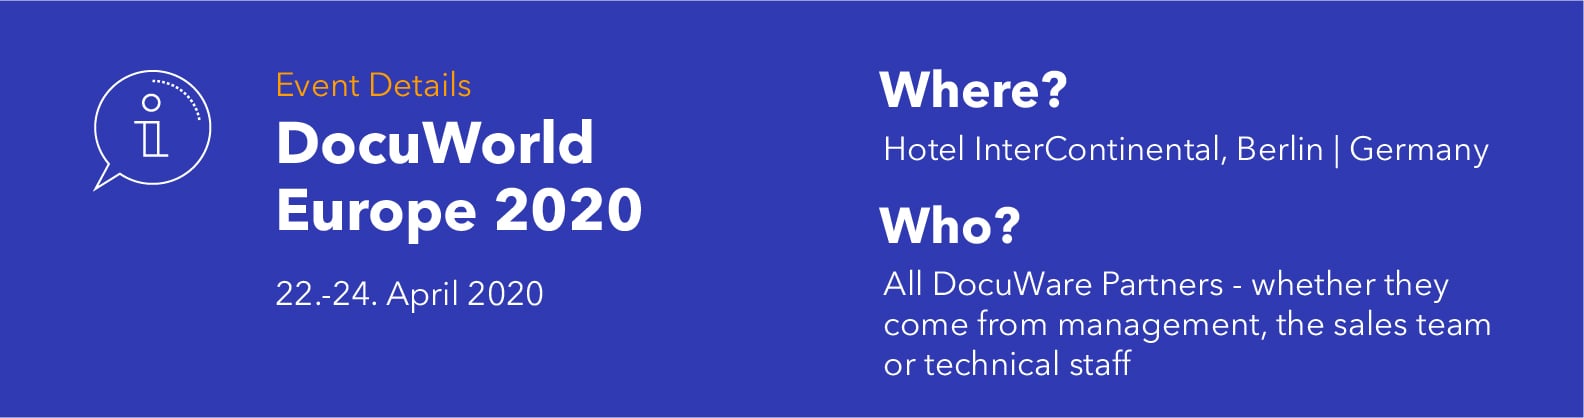 DocuWorld Europe 2020: Event Details